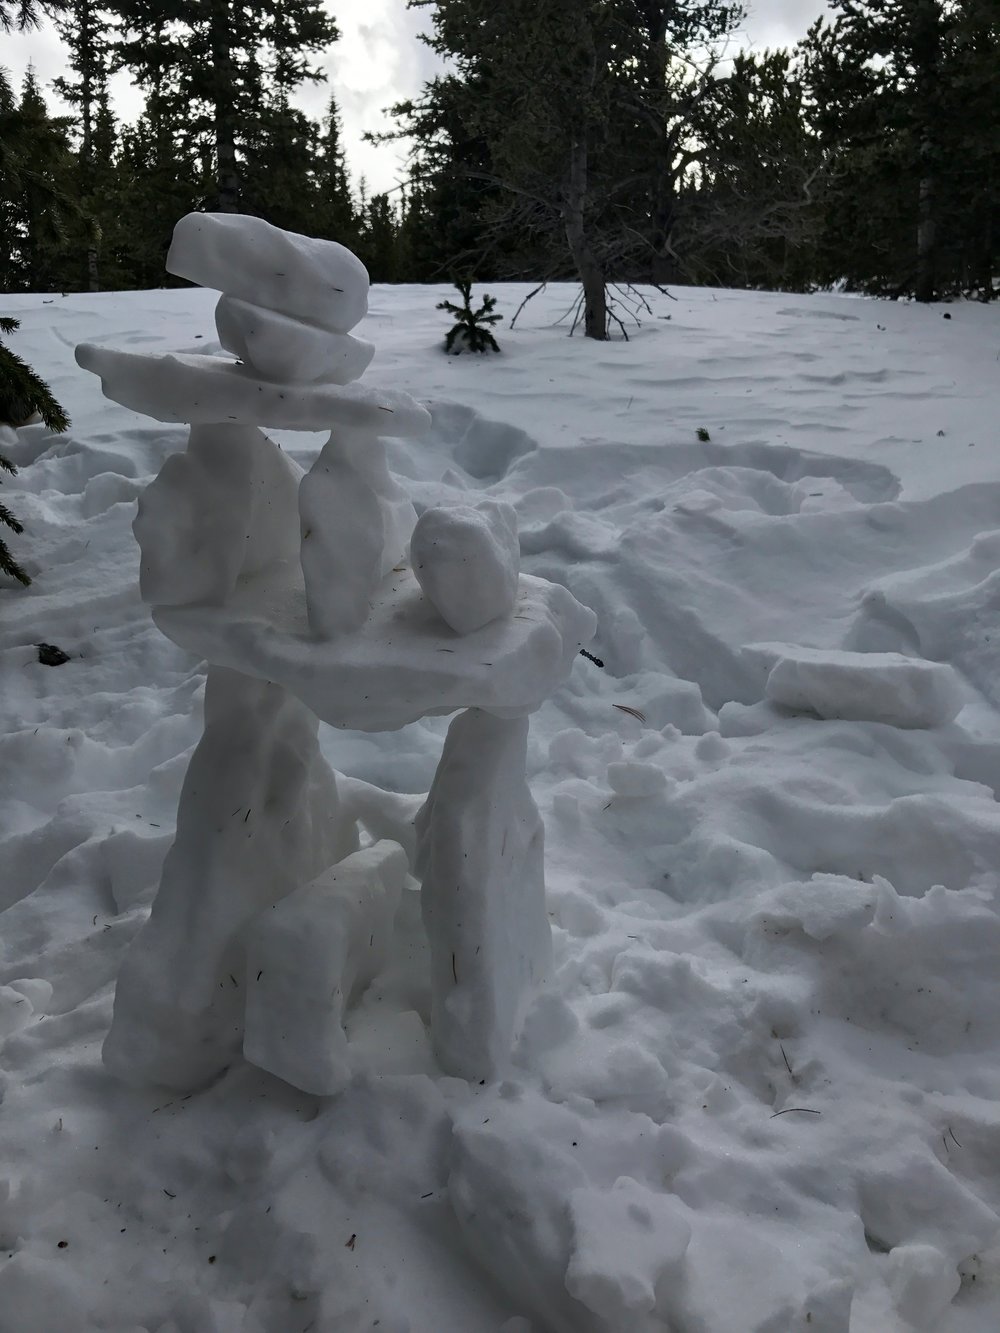  Snow sculpture along the trail. 